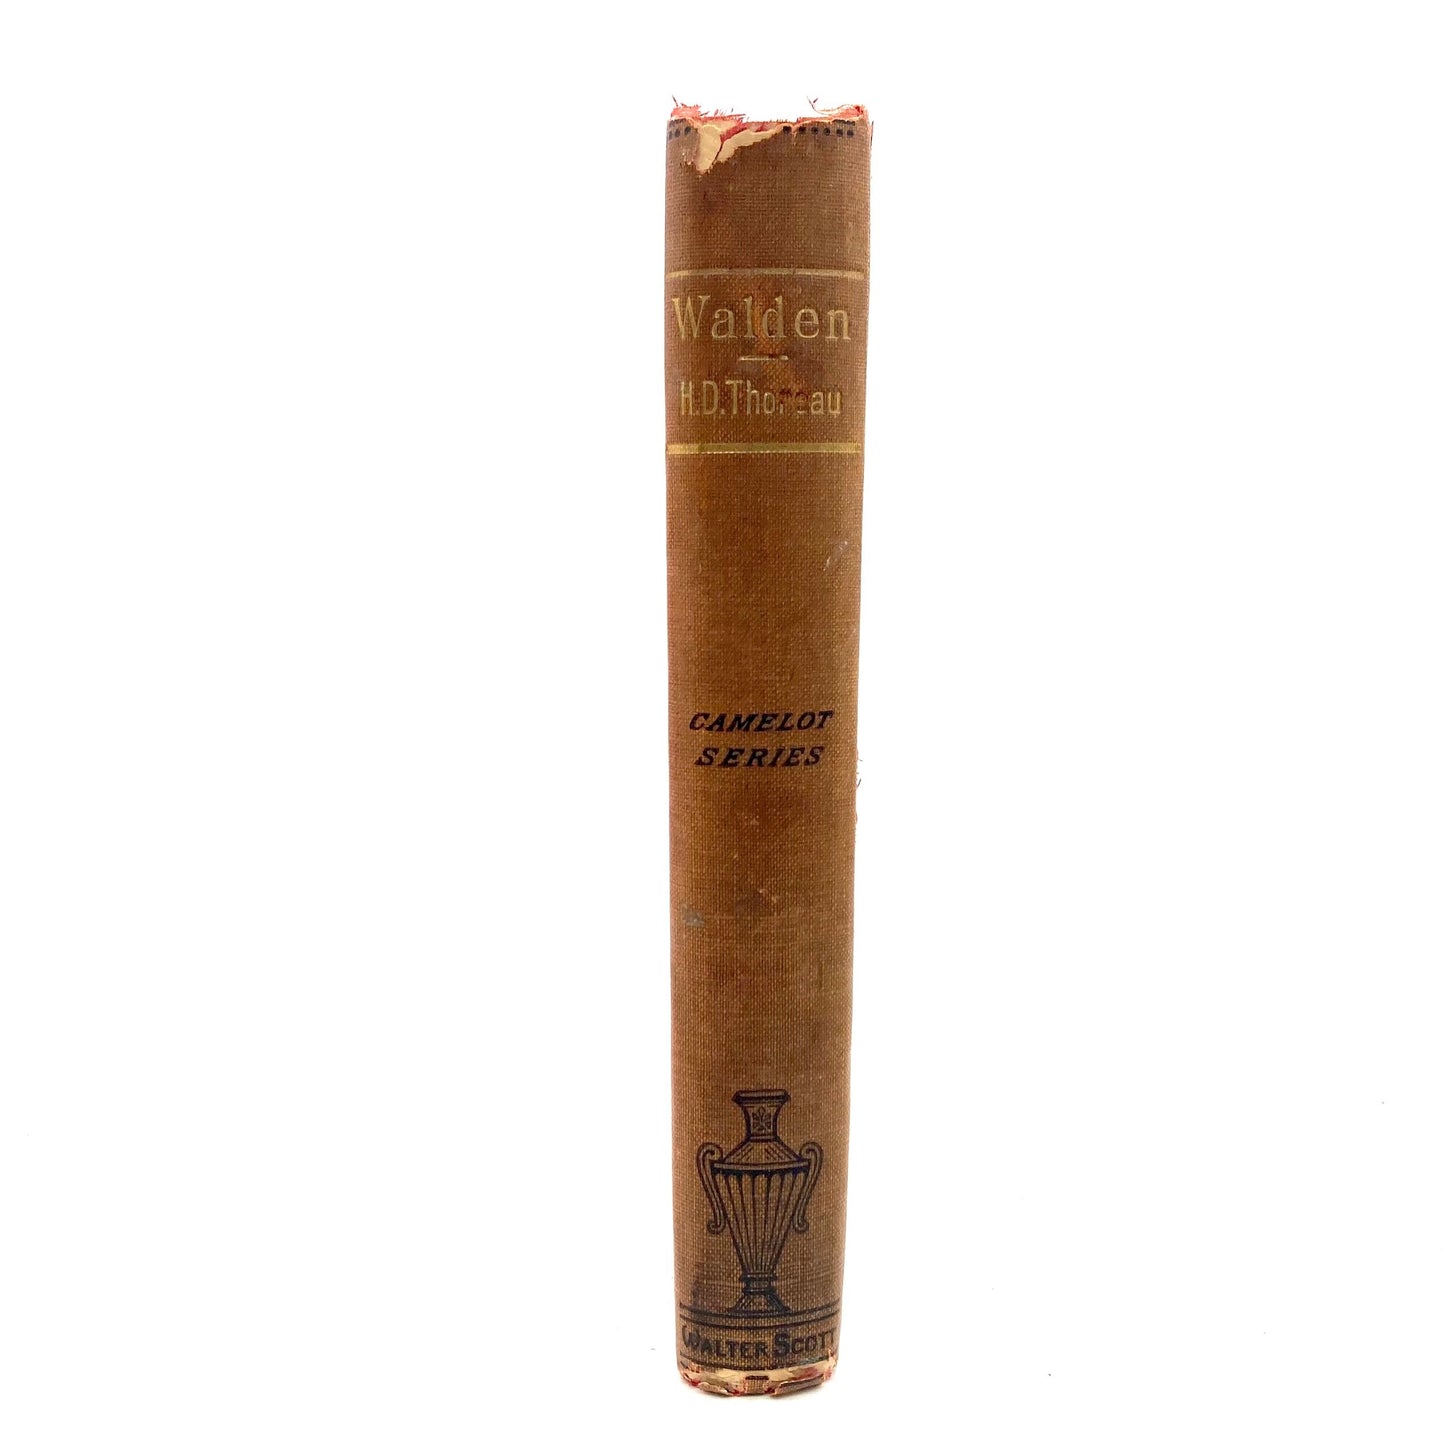 THOREAU, Henry David "Walden" [Walter Scott, 1886] - Buzz Bookstore